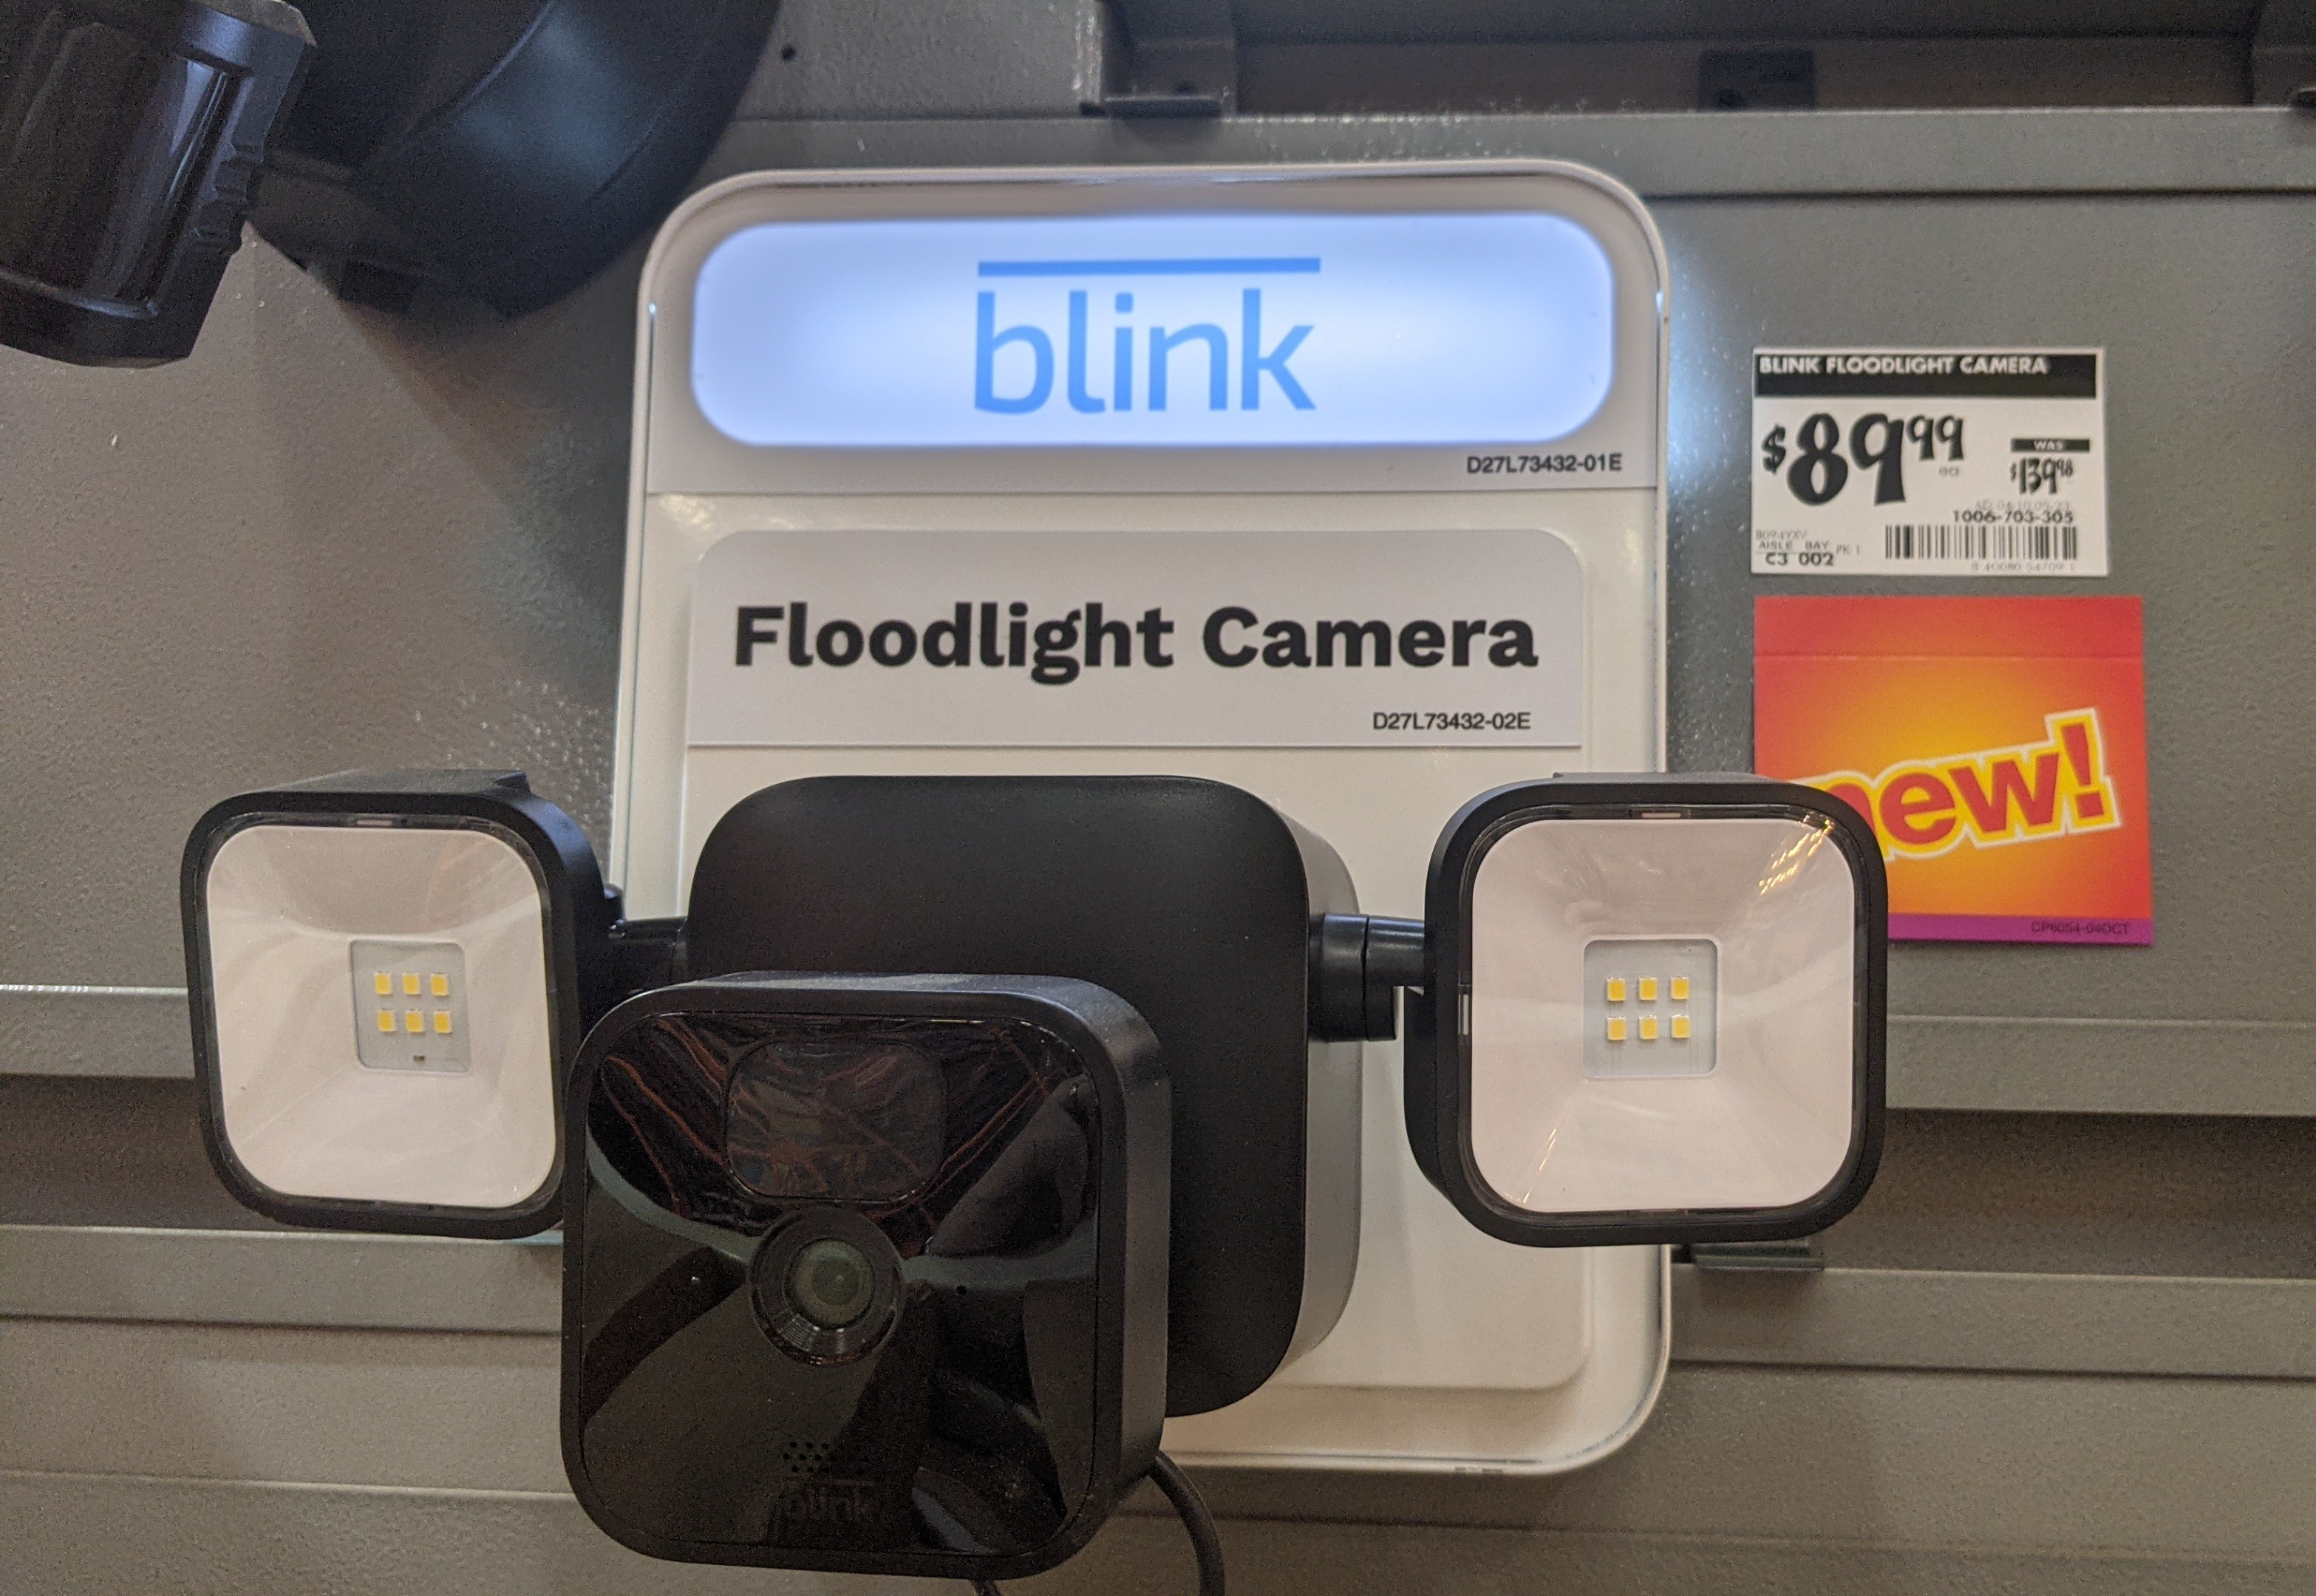 Blink Floodlight Camera System at Home Depot $89.98